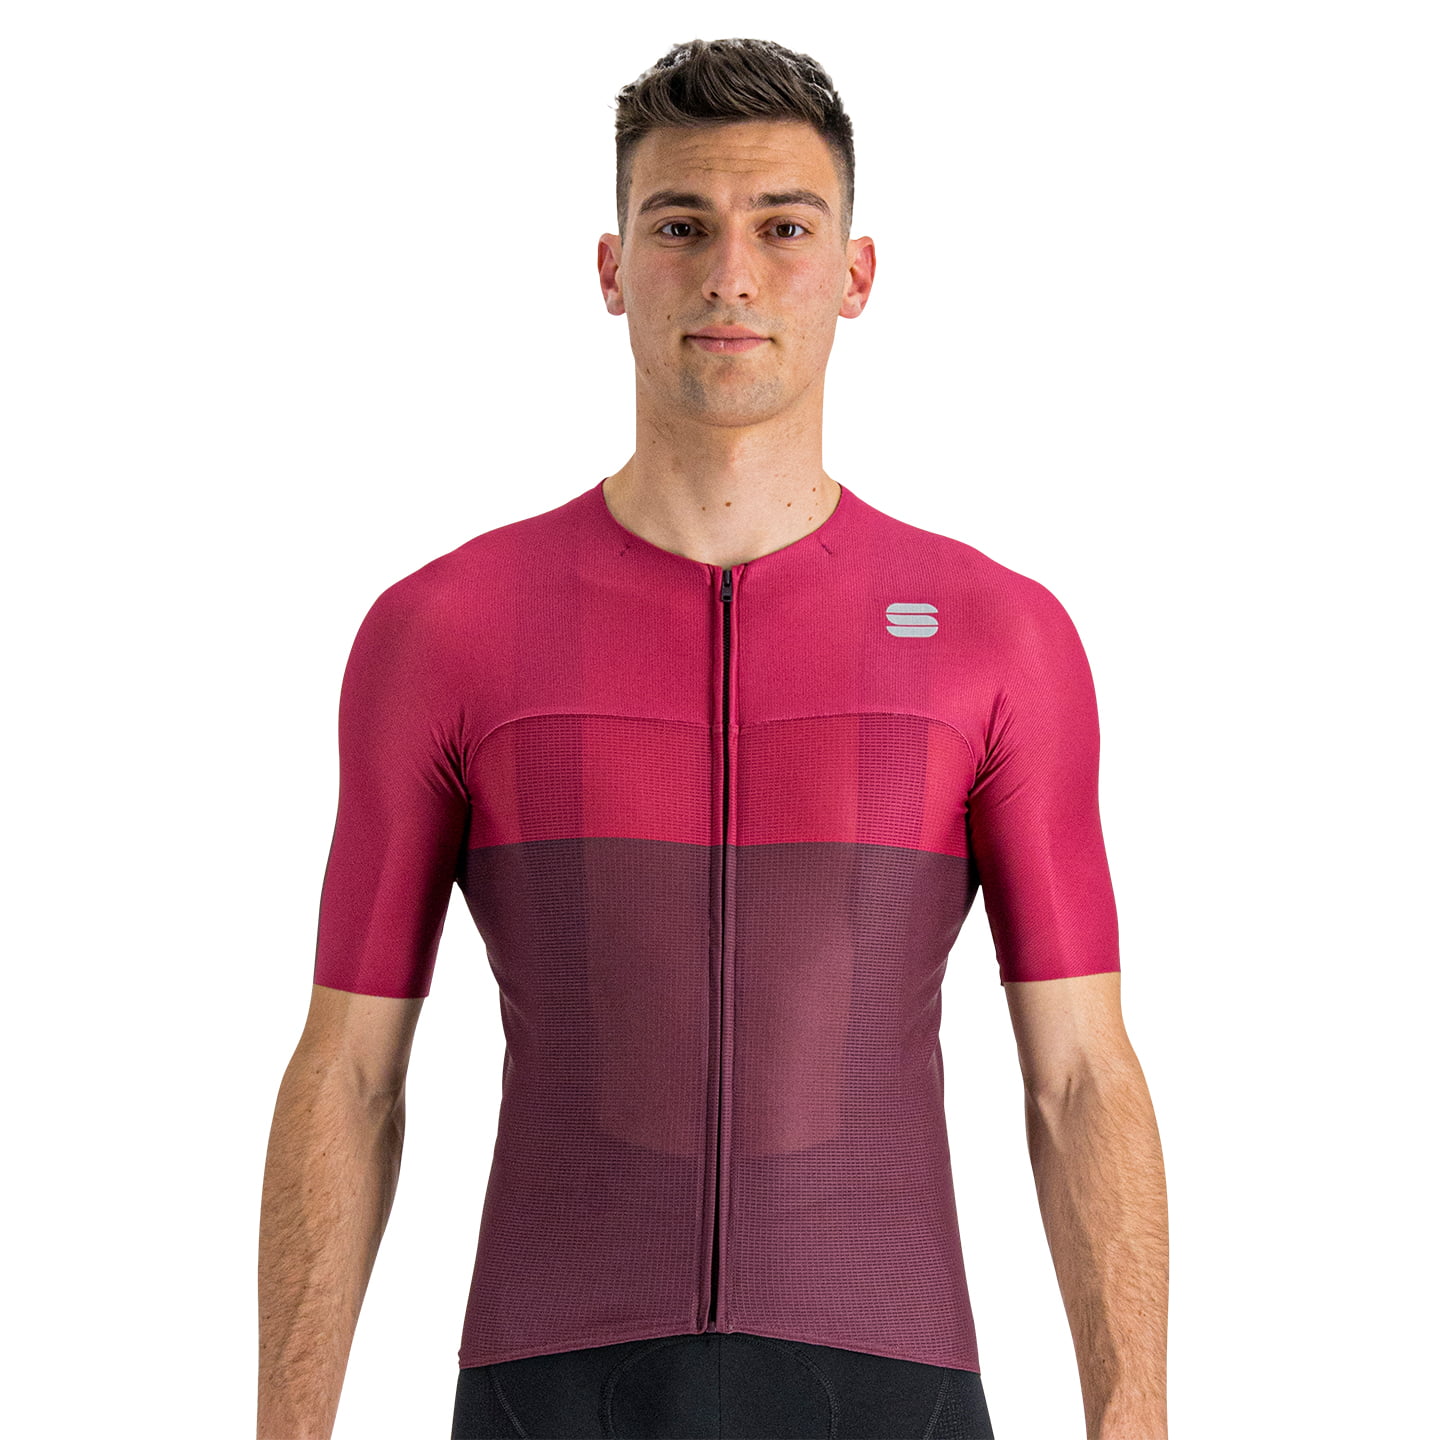 SPORTFUL Light Pro Short Sleeve Jersey Short Sleeve Jersey, for men, size 2XL, Cycling jersey, Cycle clothing